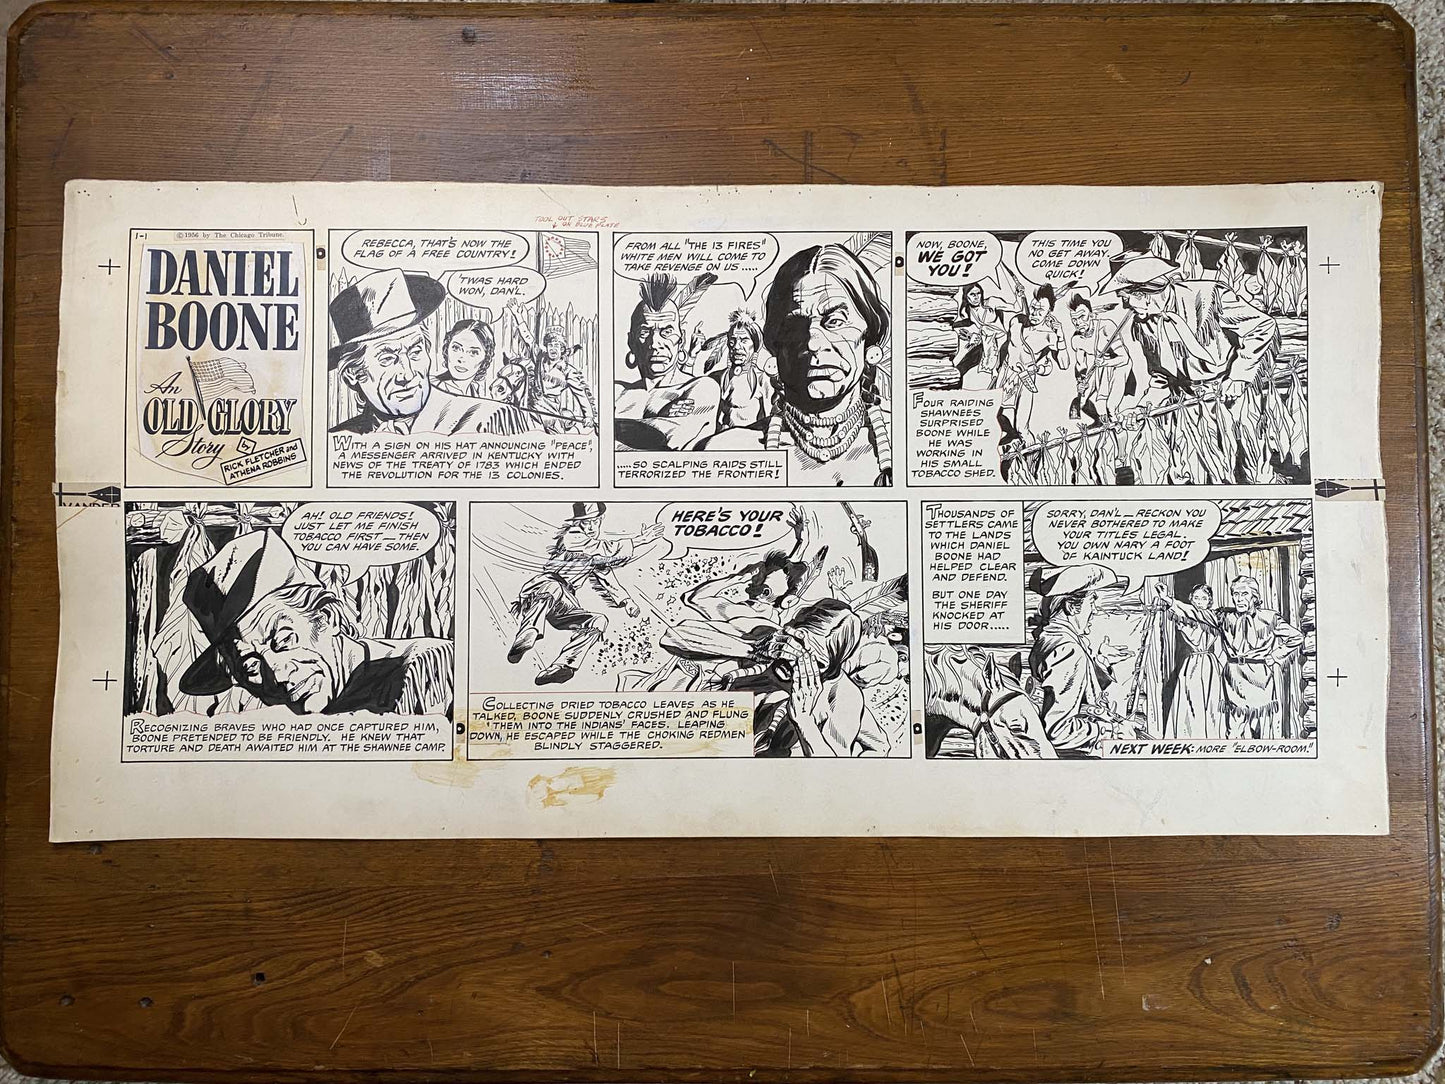 Daniel Boone: An Old Glory Story 1/1/56 Original Art Illustration | Fletcher Studio